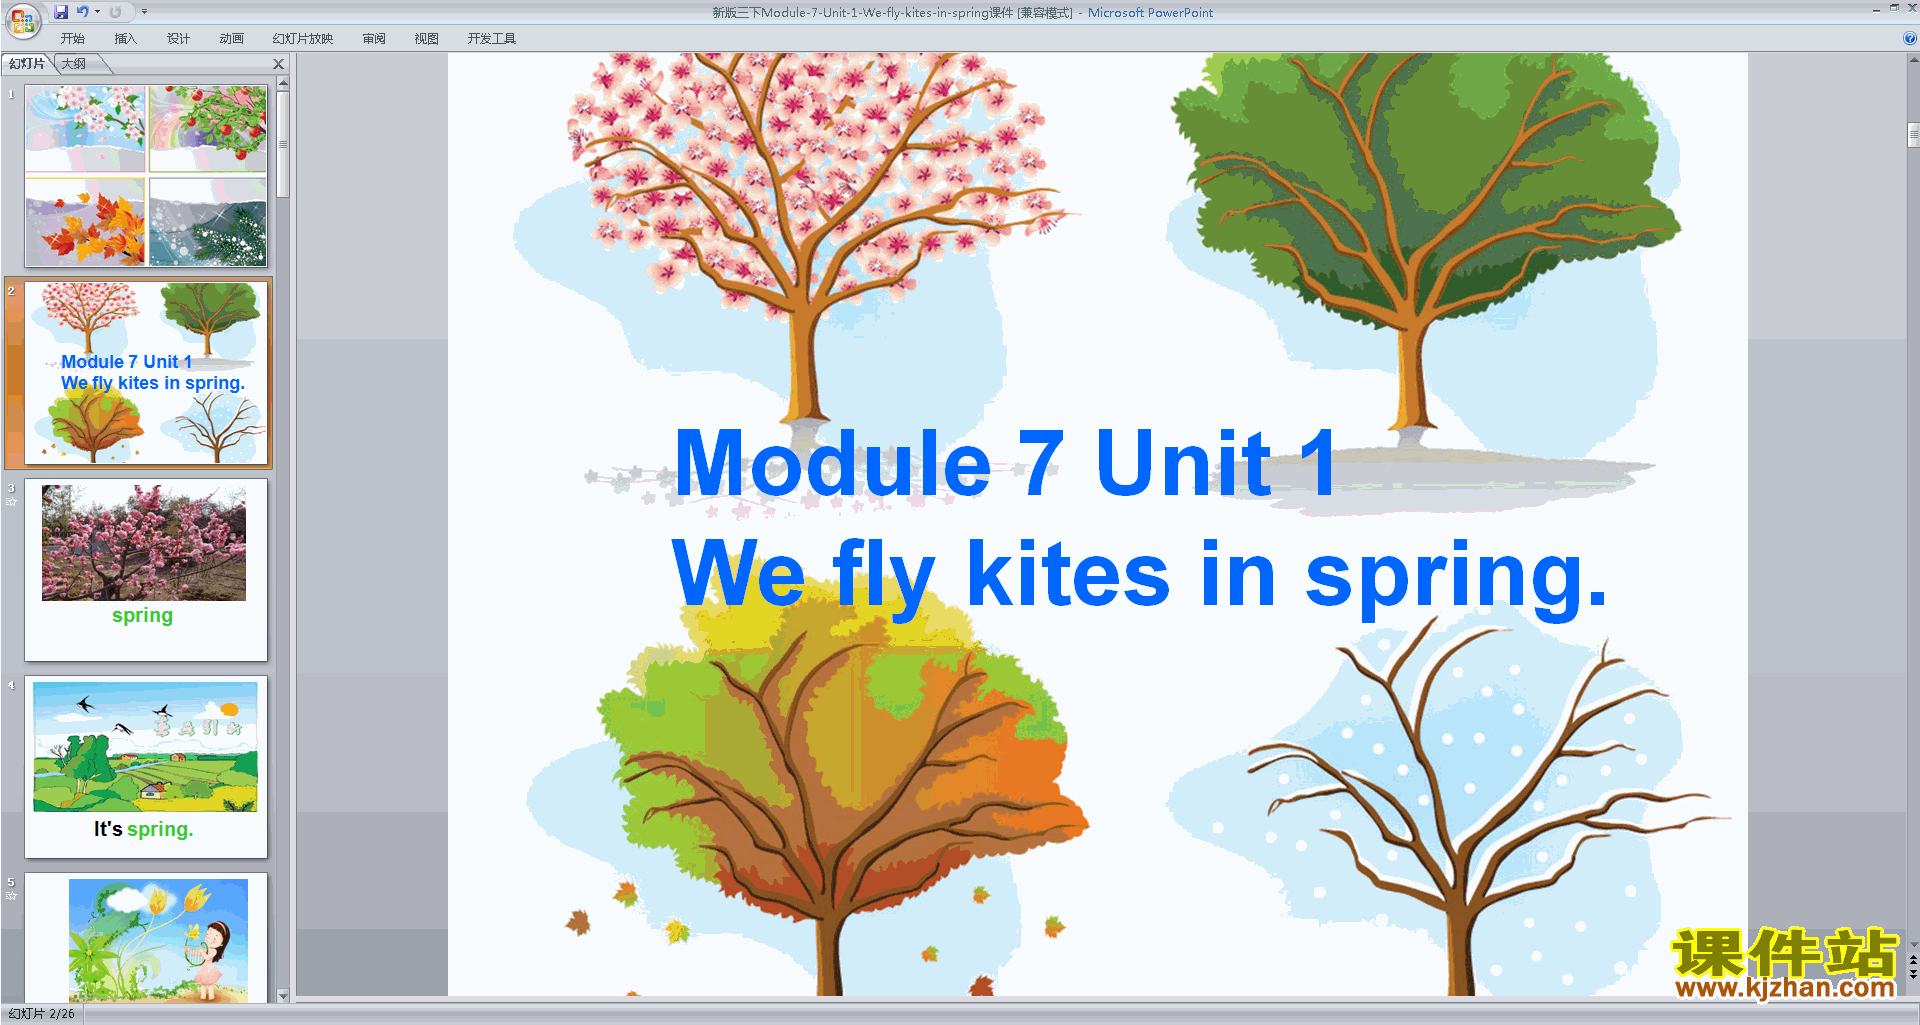 пModule 7 Unit1 We fly kites in springμppt